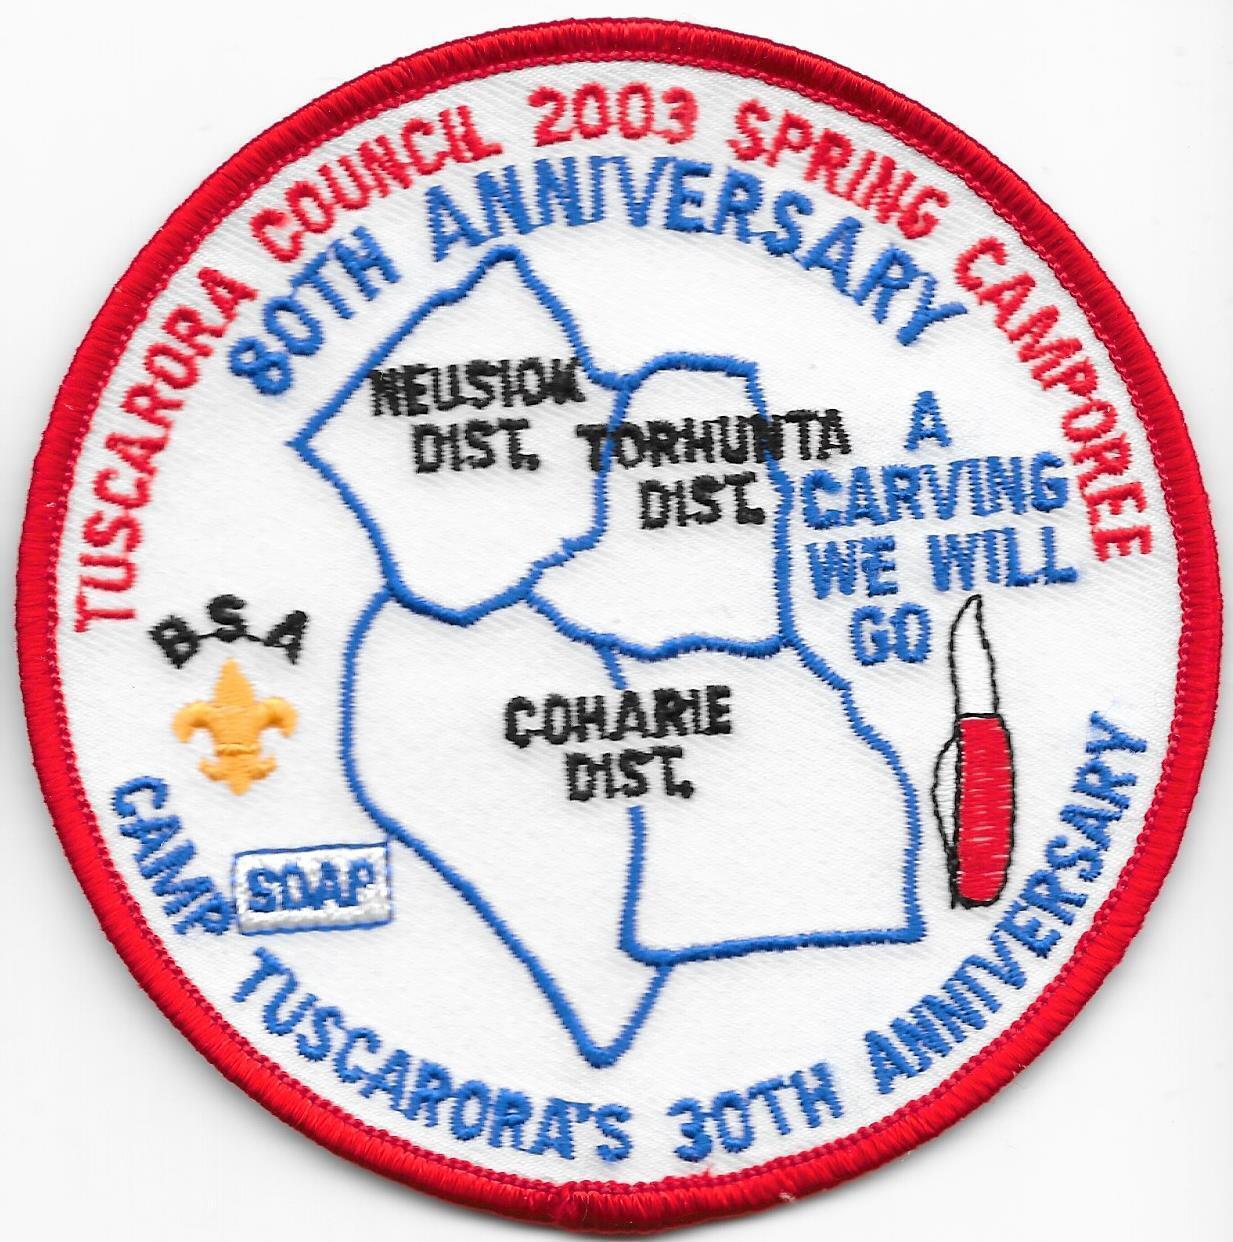 2003 Spring Camporee Tuscarora Council Boy Scouts of America BSA